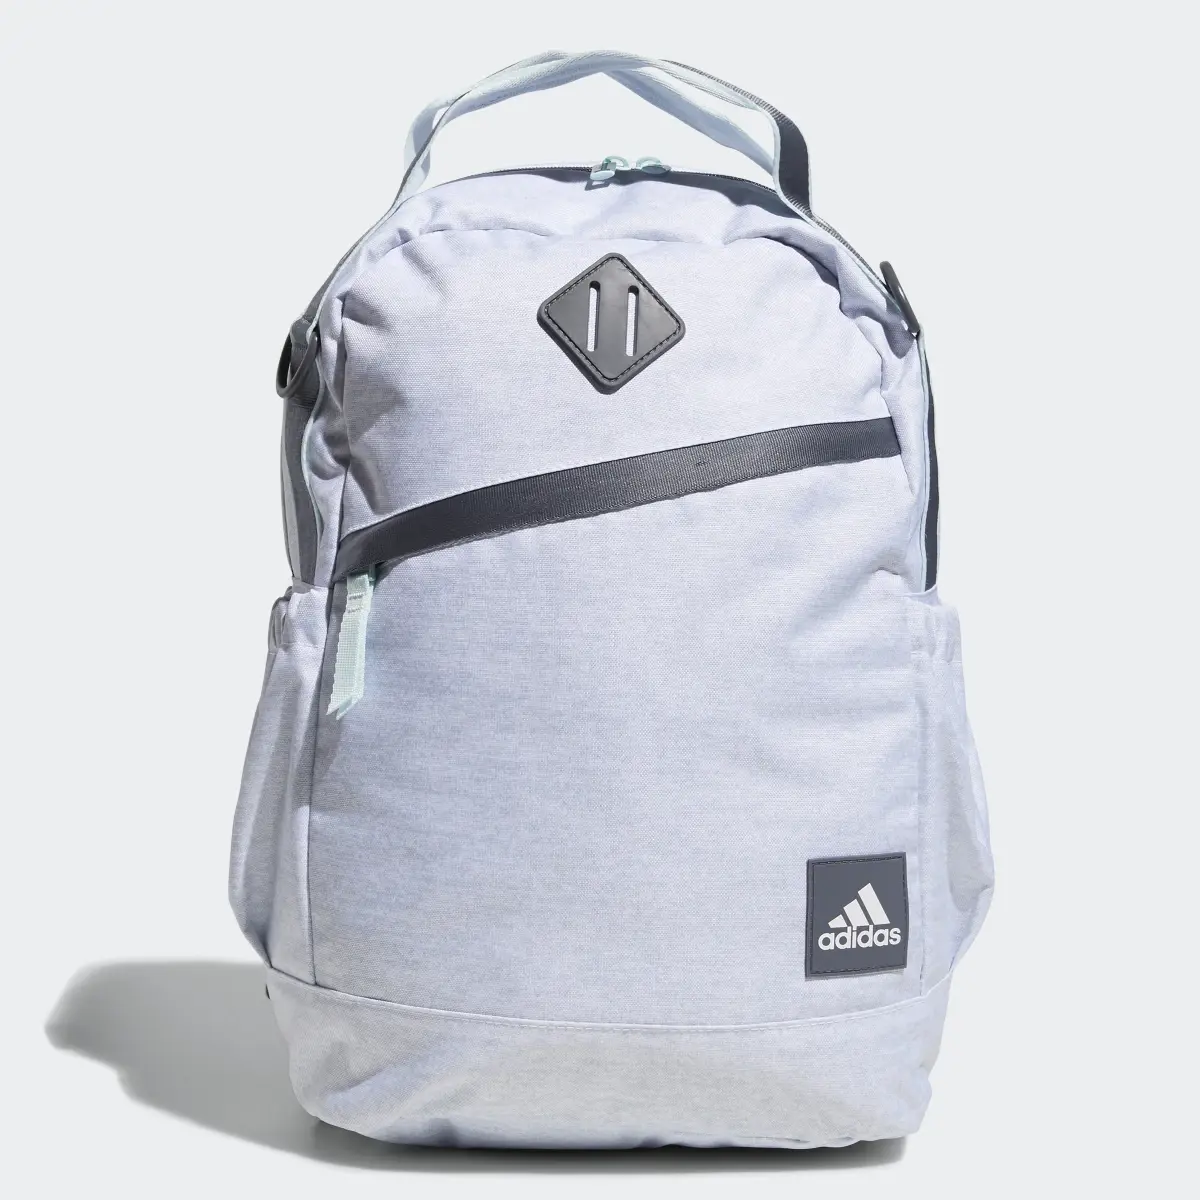 Adidas Squad Backpack. 1